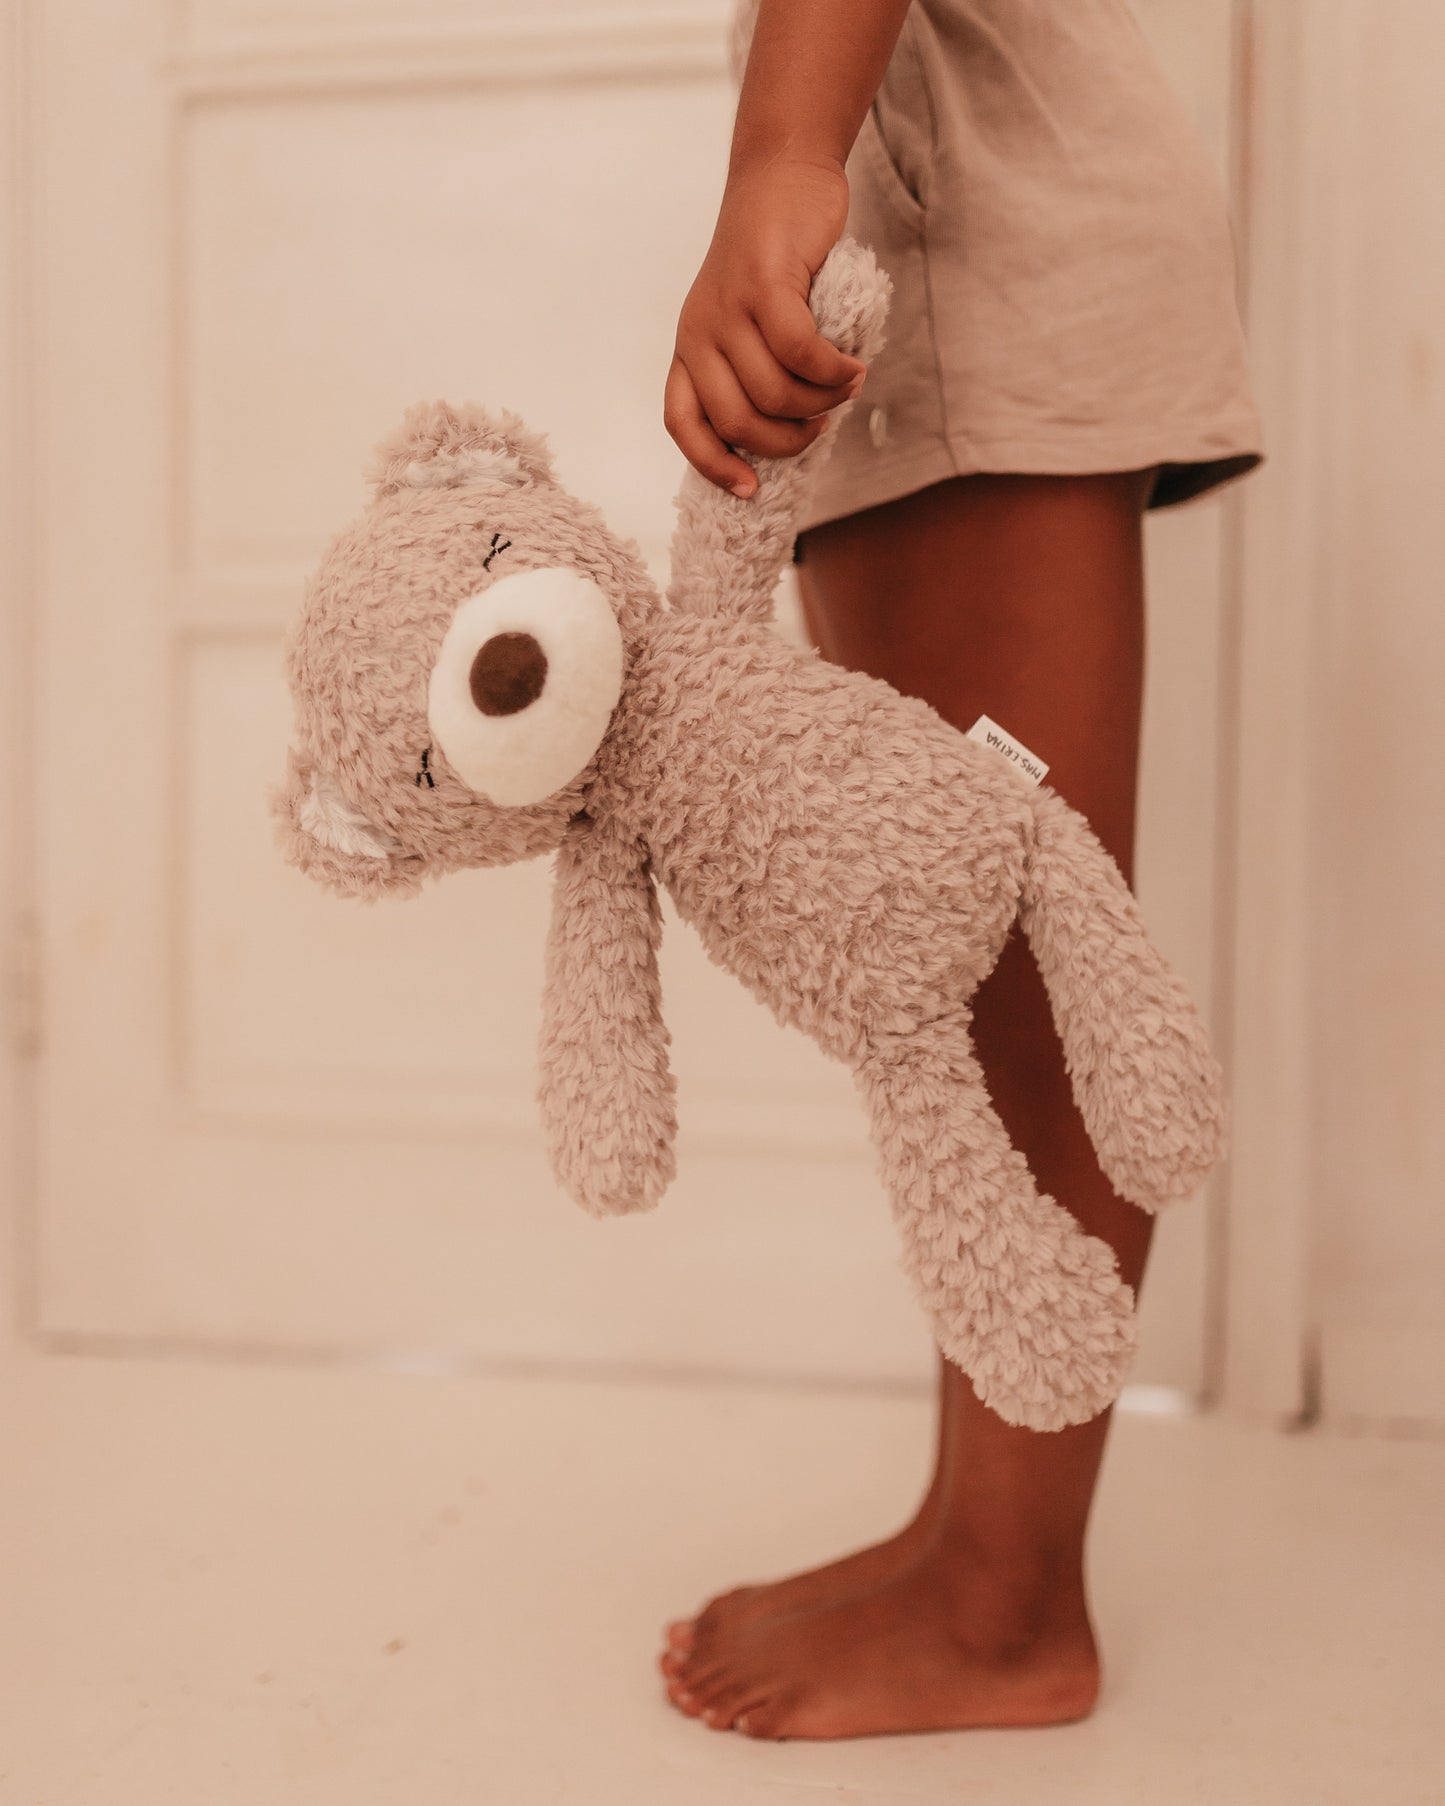 Stuffed animals - Mr. Pyxie - Teddy